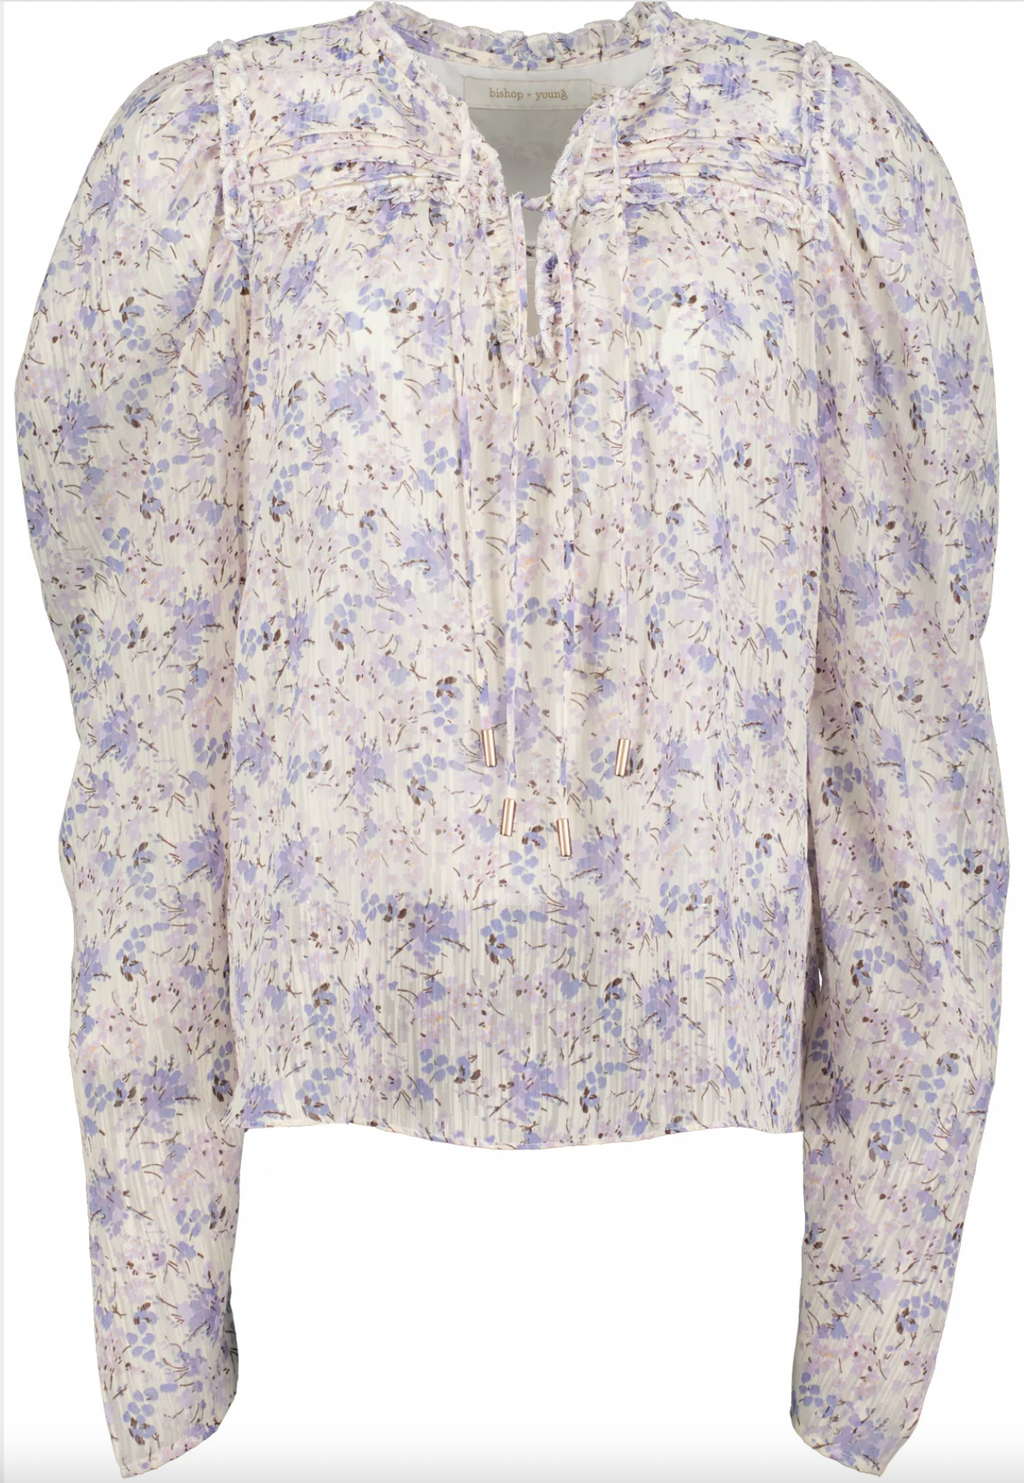 Sydney Long Sleeve Blouse- Cream/Purple Botanical Print